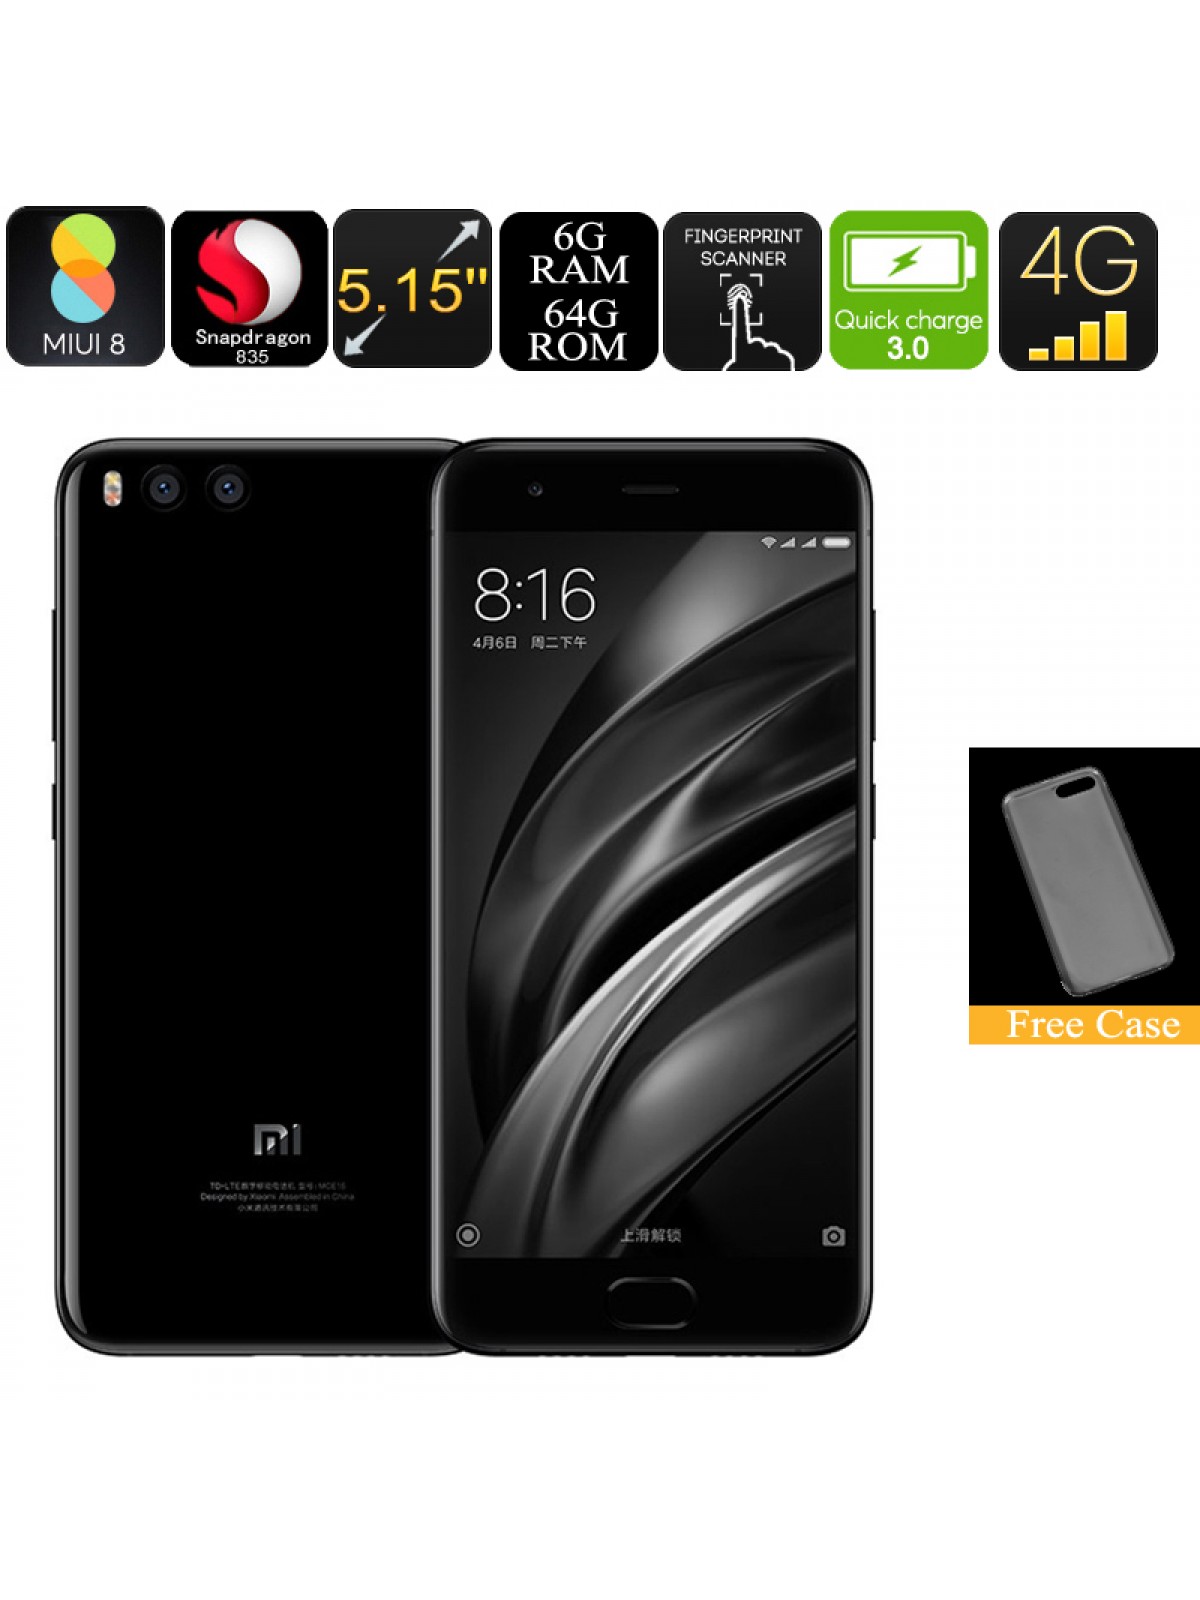 Xiaomi Mi6 Android Phone (Black)